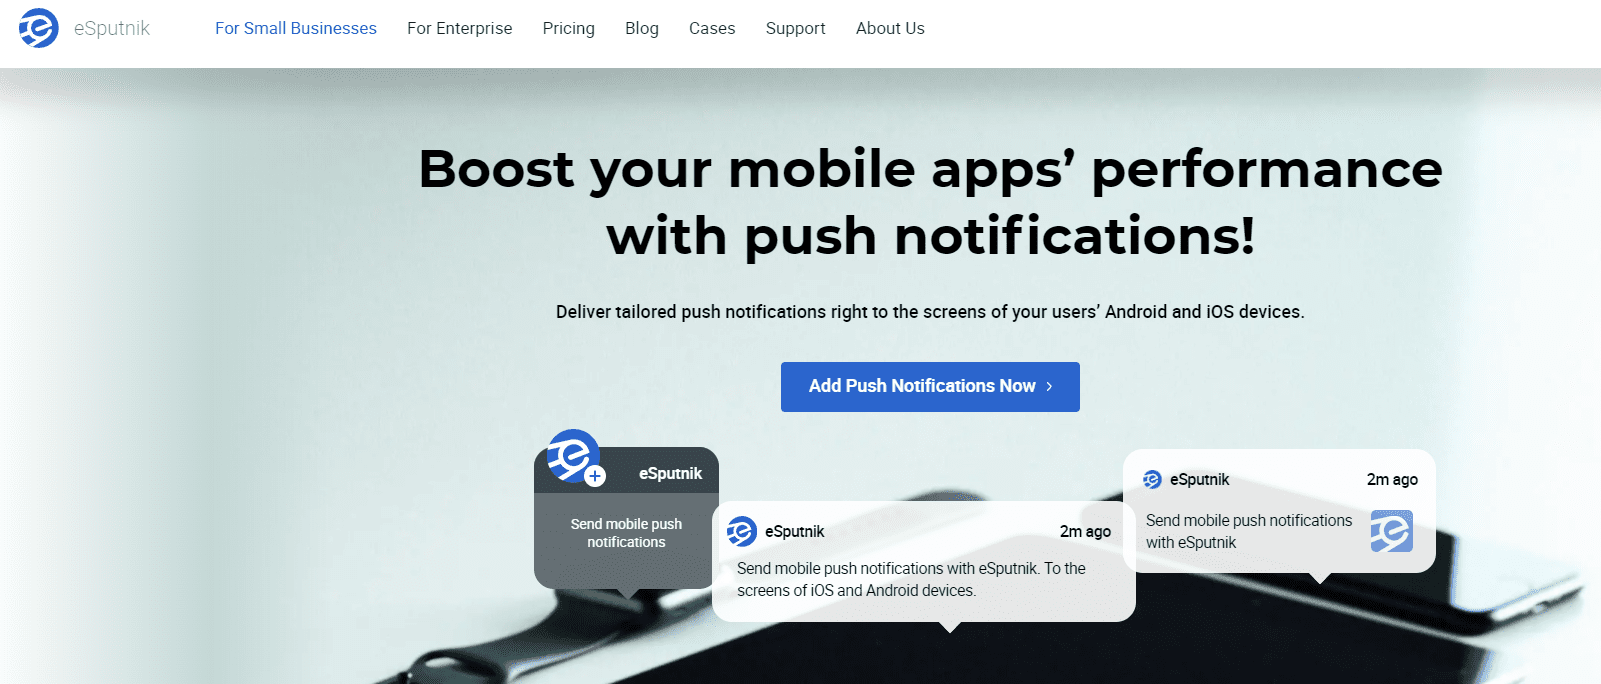 eSputnik Mobile Push Notifications - eSputnik Review